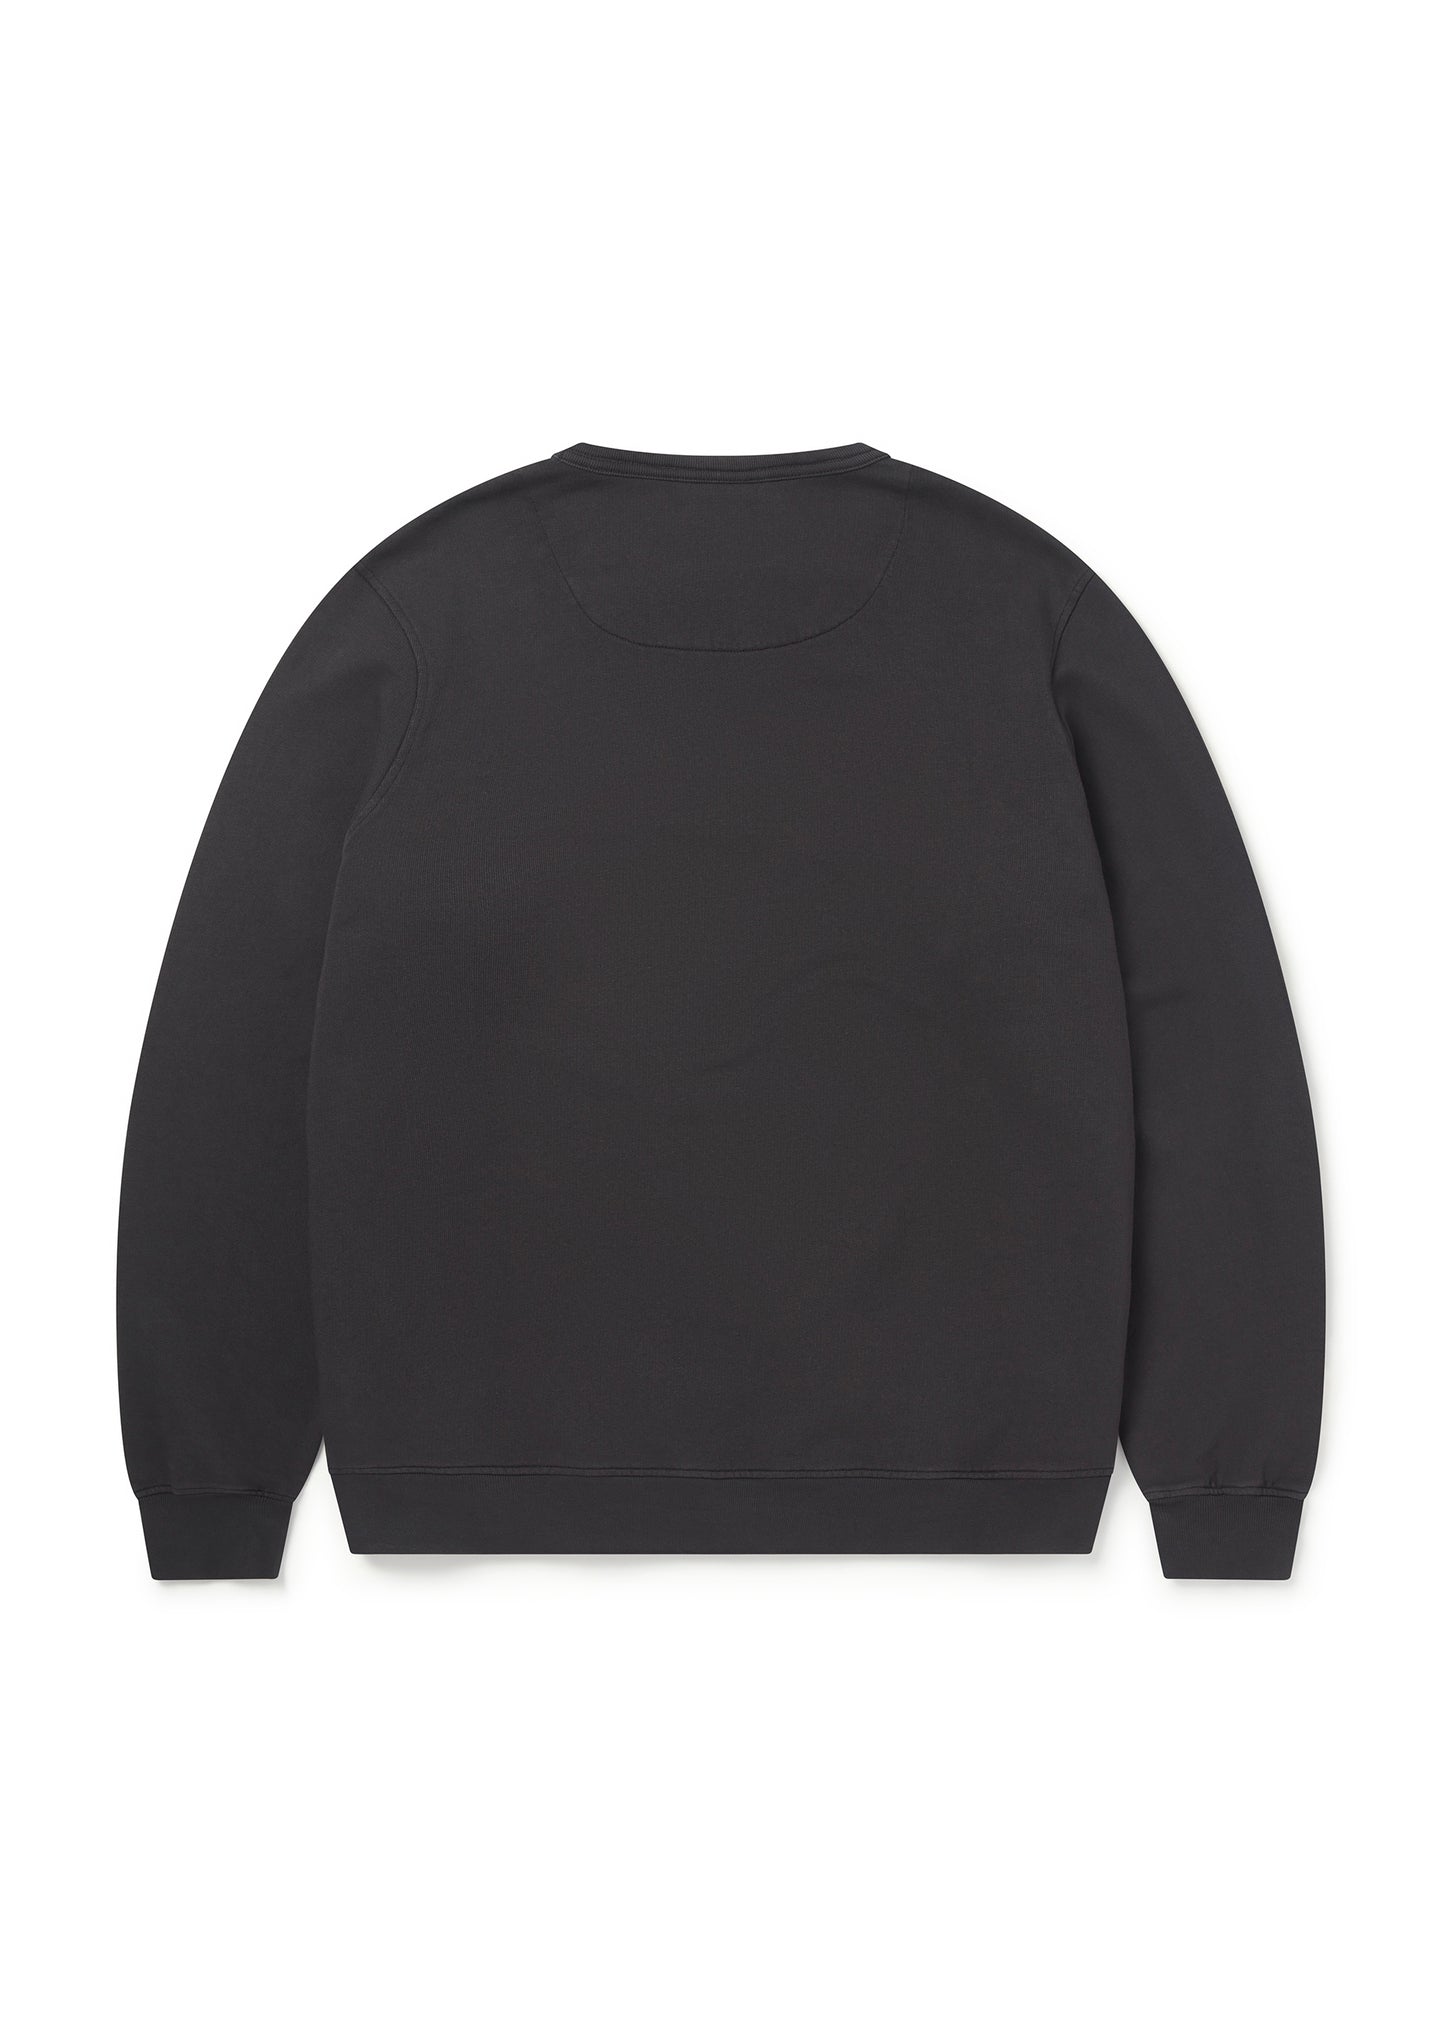 Vintage Lightweight Sweatshirt in Black